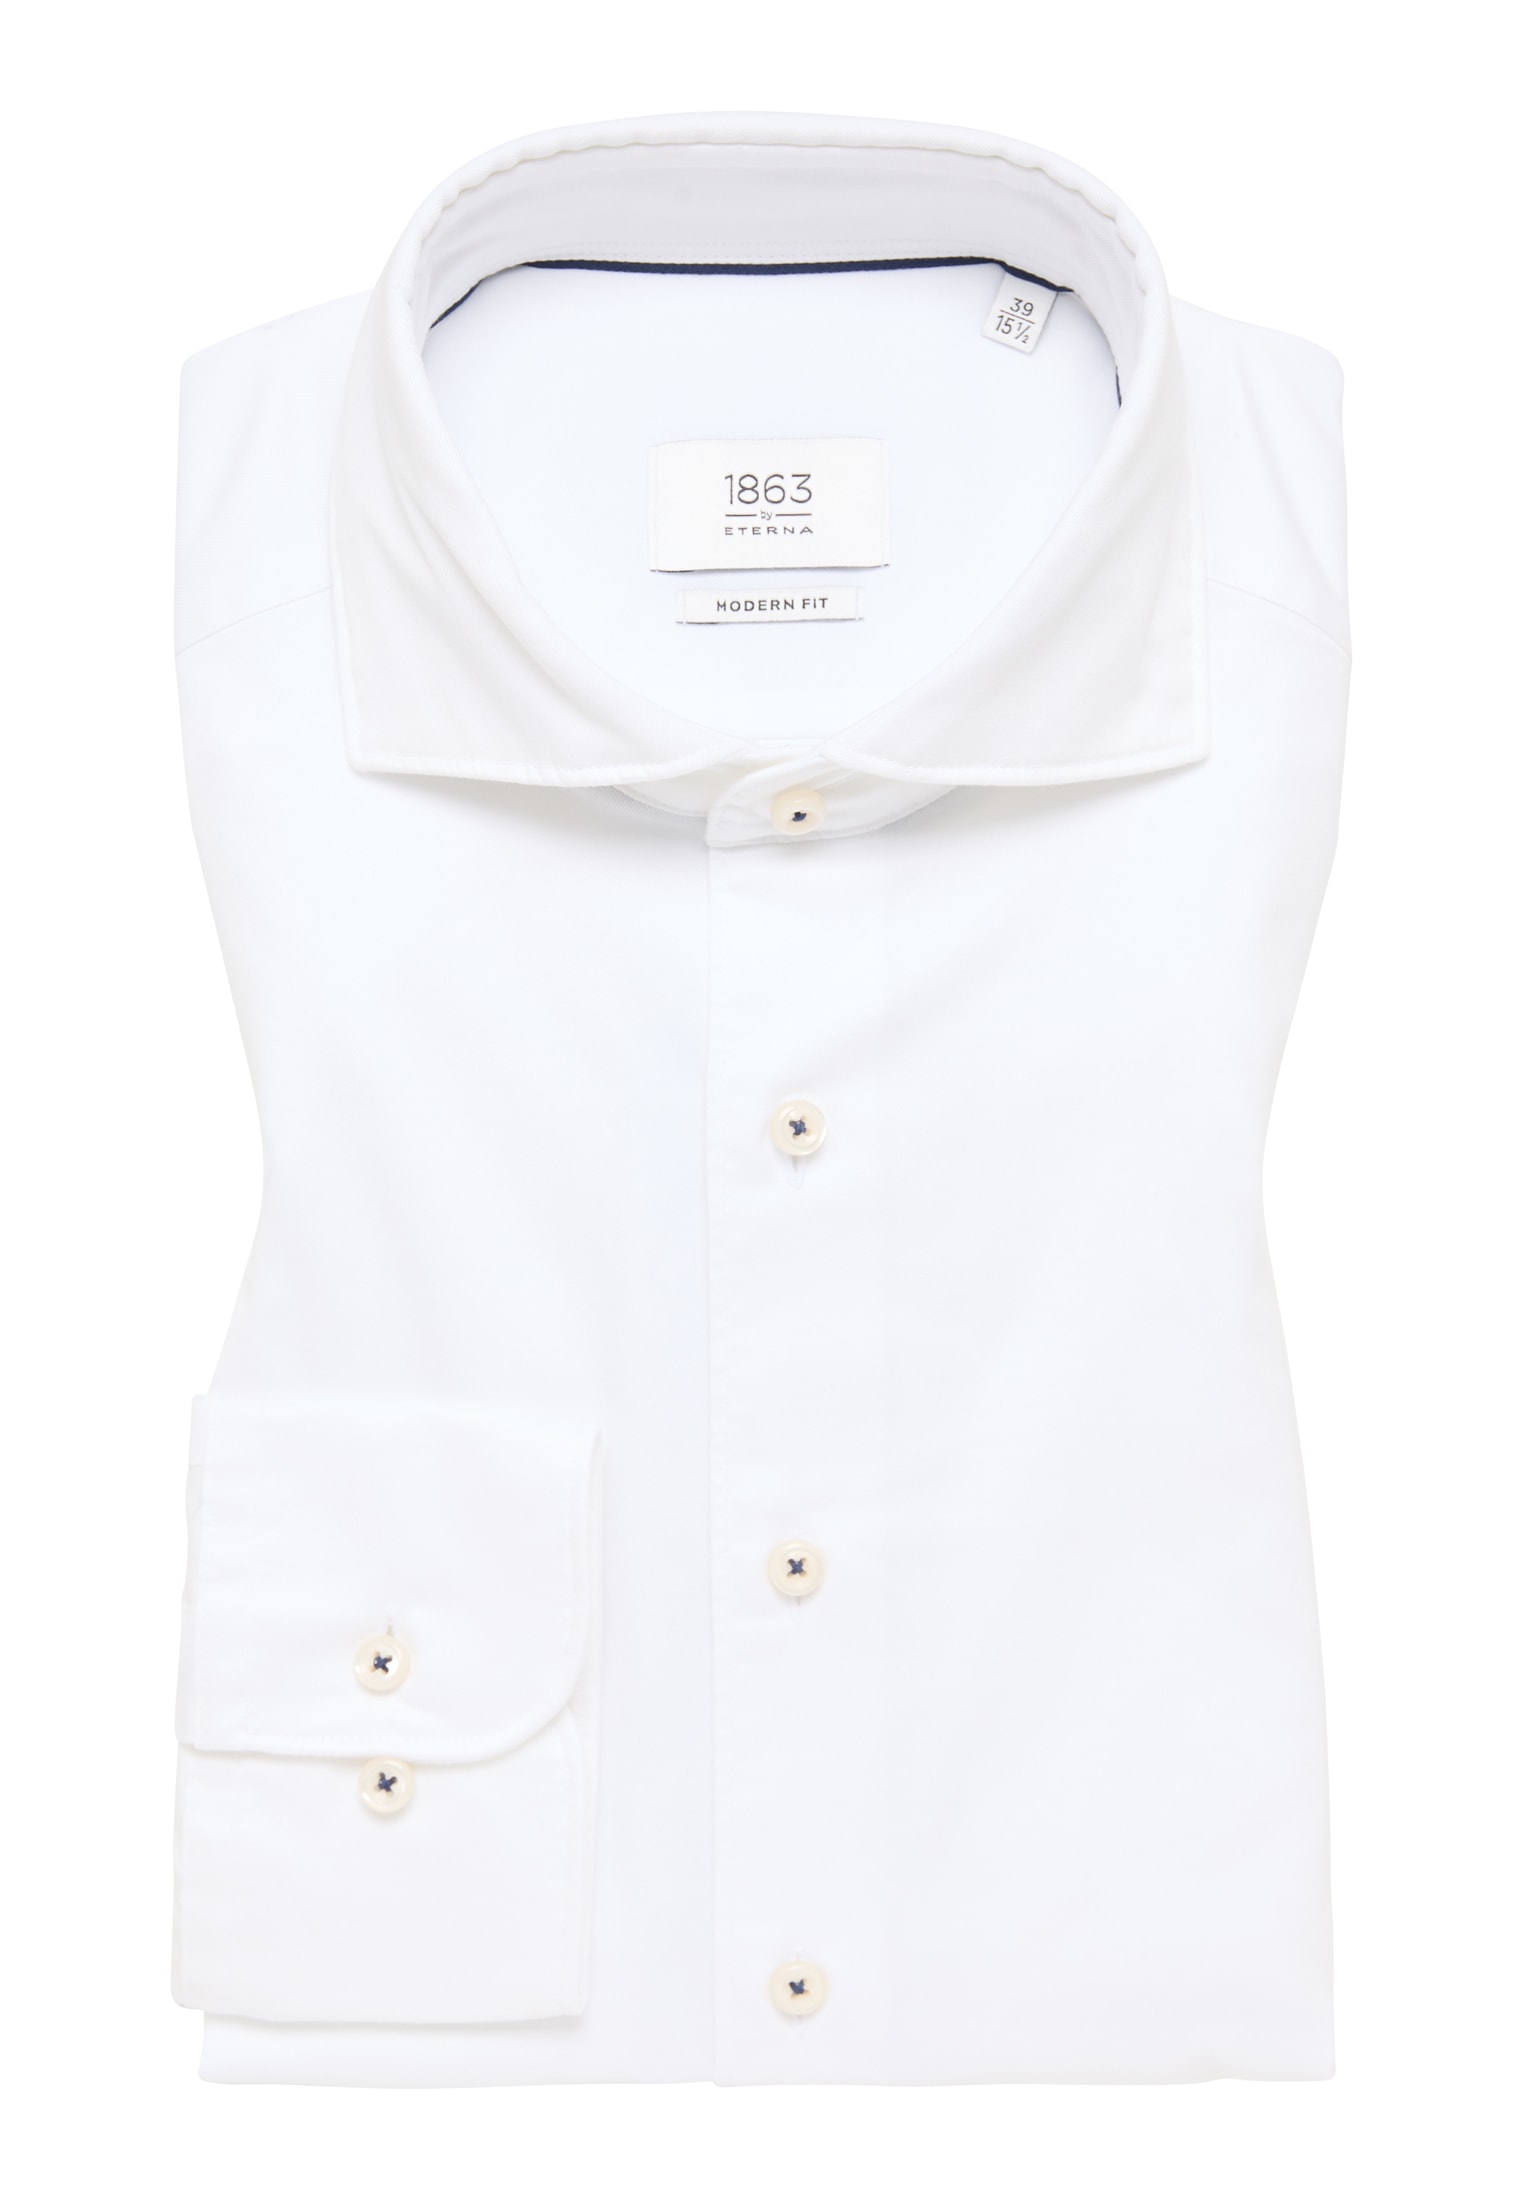 unifarben FIT MODERN Luxury | | | Soft Shirt | 1SH03488-00-02-43-1/1 43 off-white Langarm in off-white